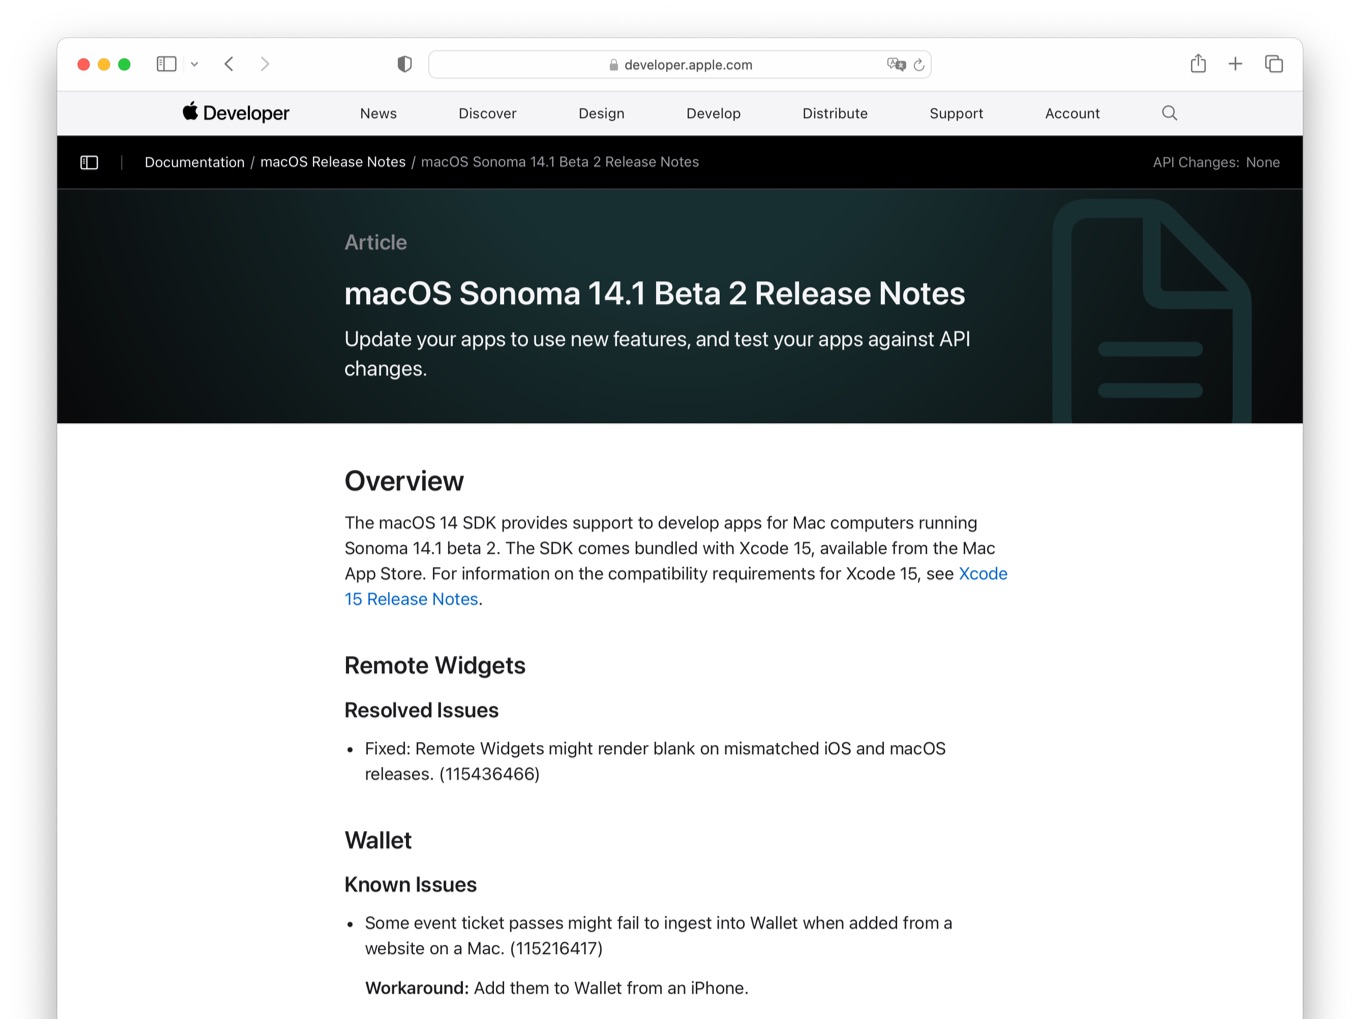 macOS Sonoma 14.1 Beta 2 Release Notes